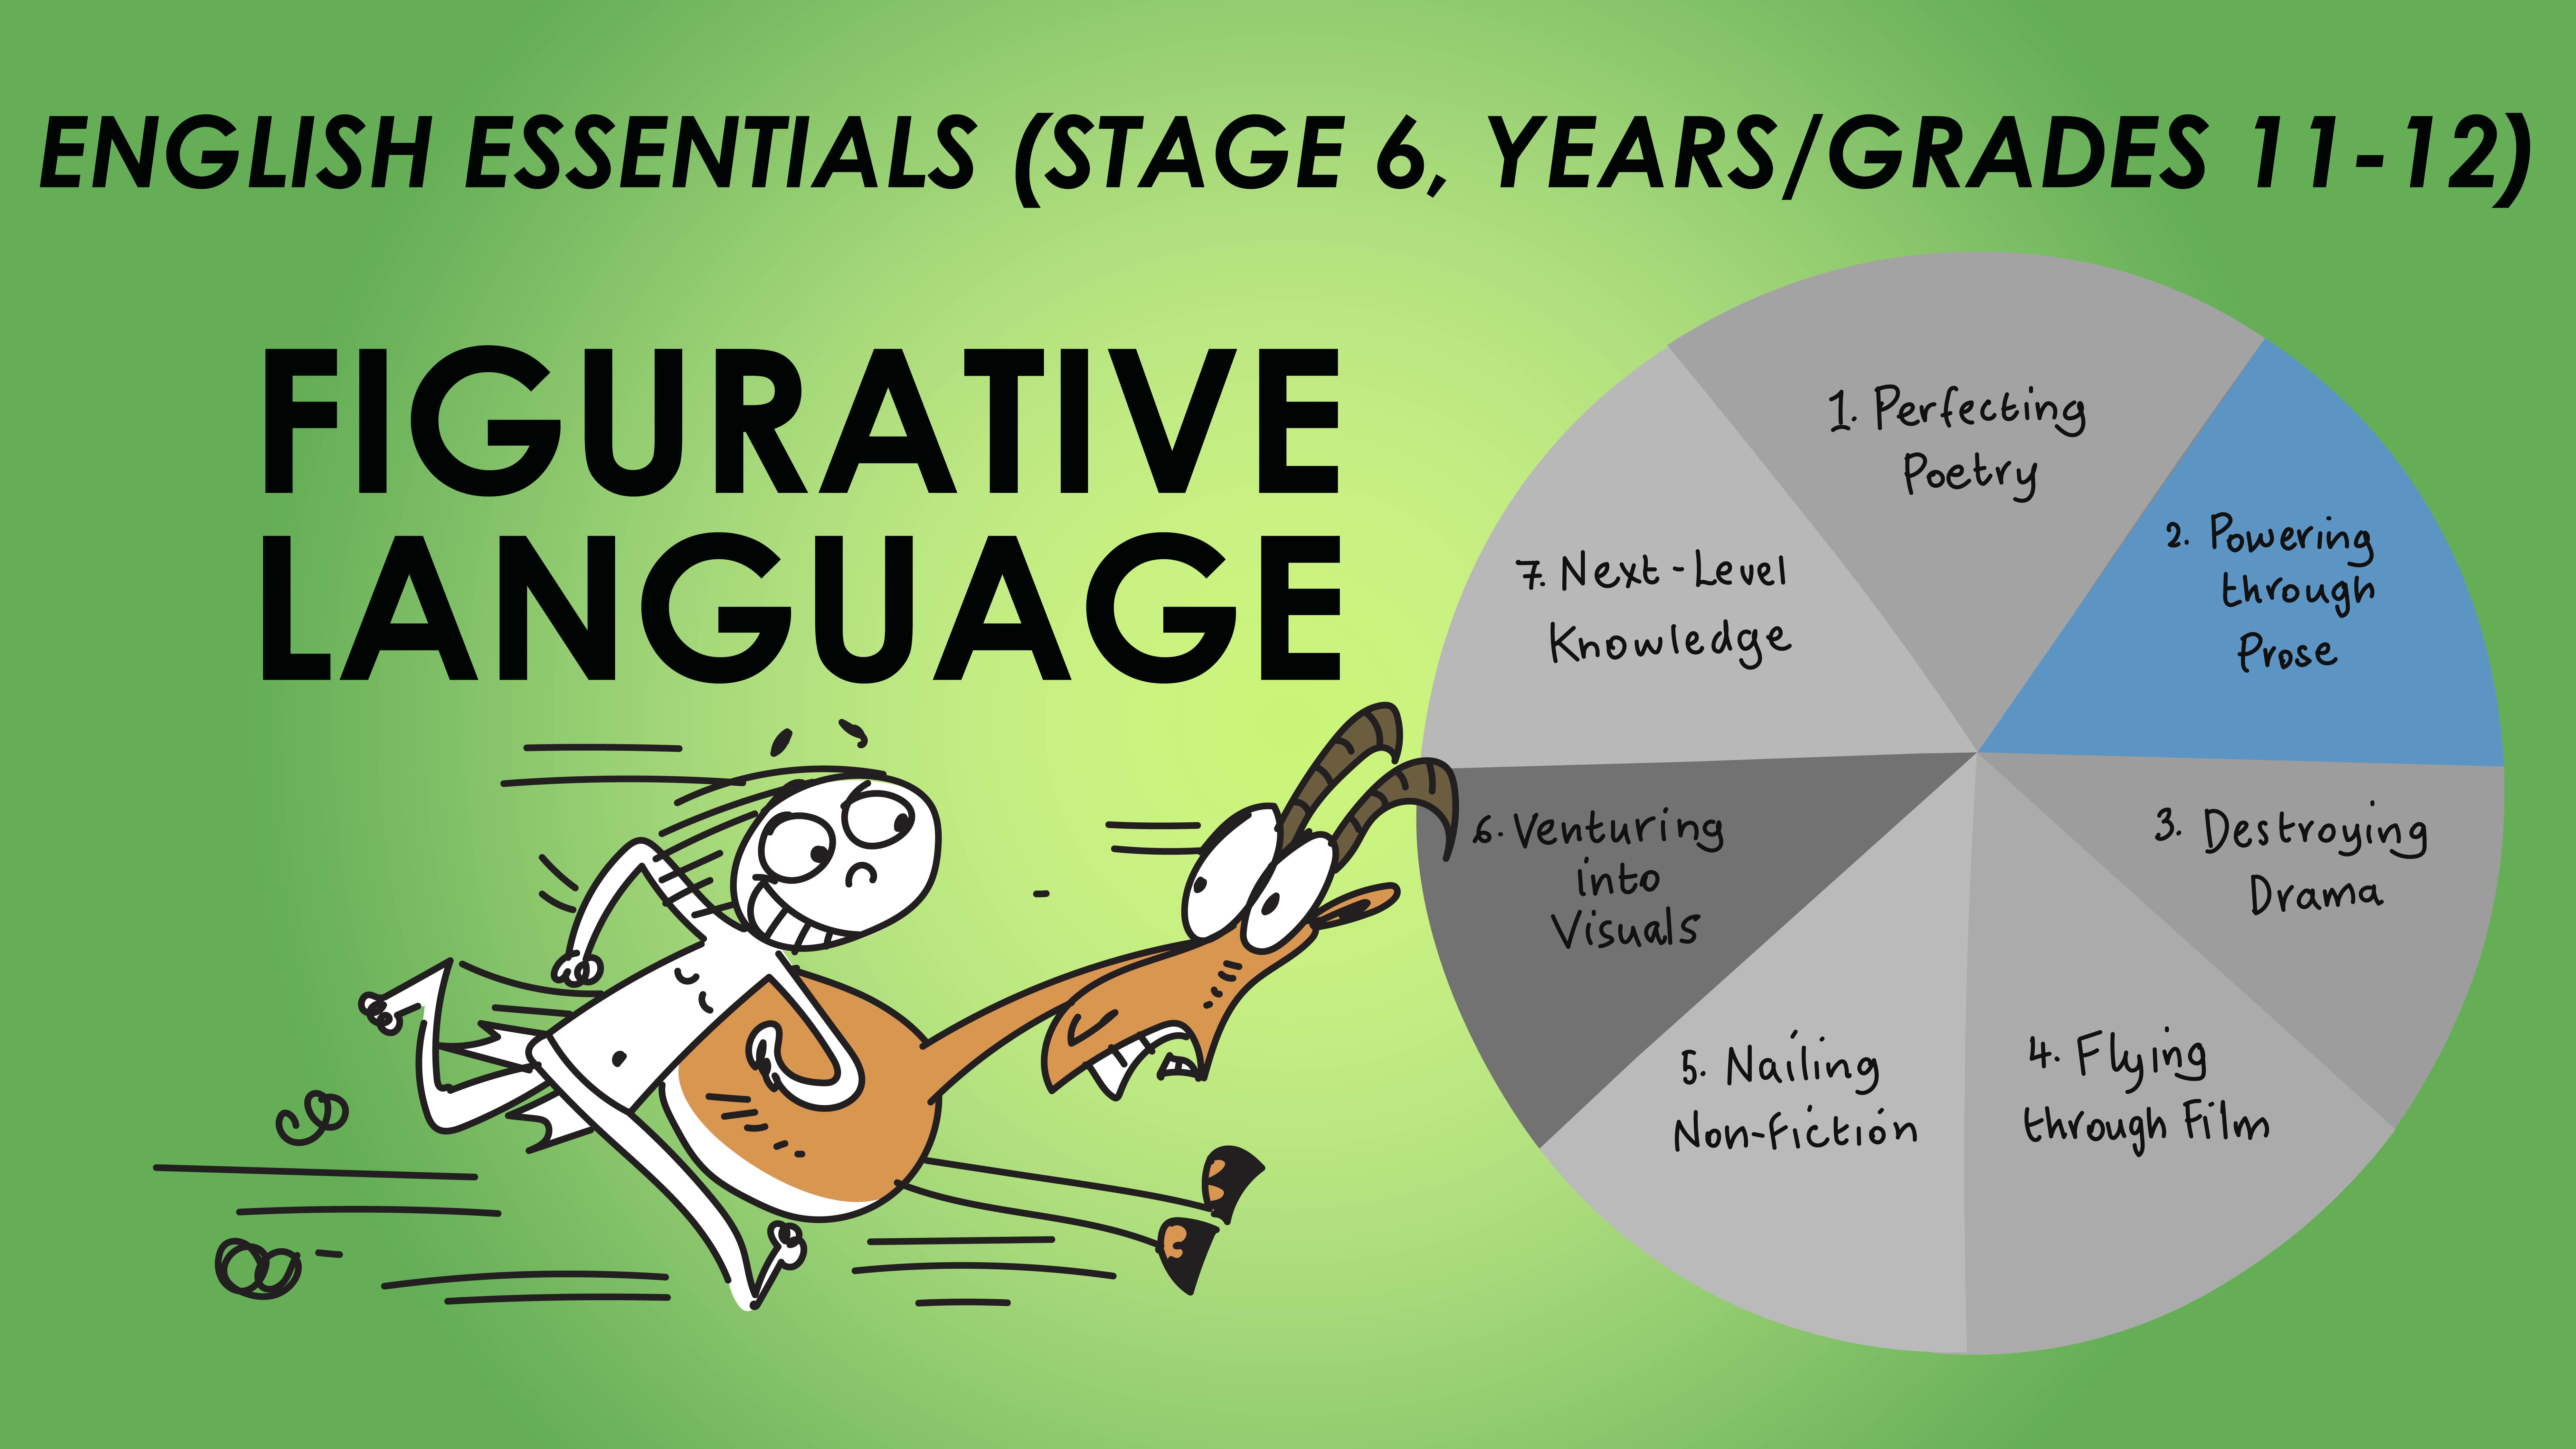 English Essentials - Powering through Prose - Figurative Language (Stage 6, Years/Grades 11-12)